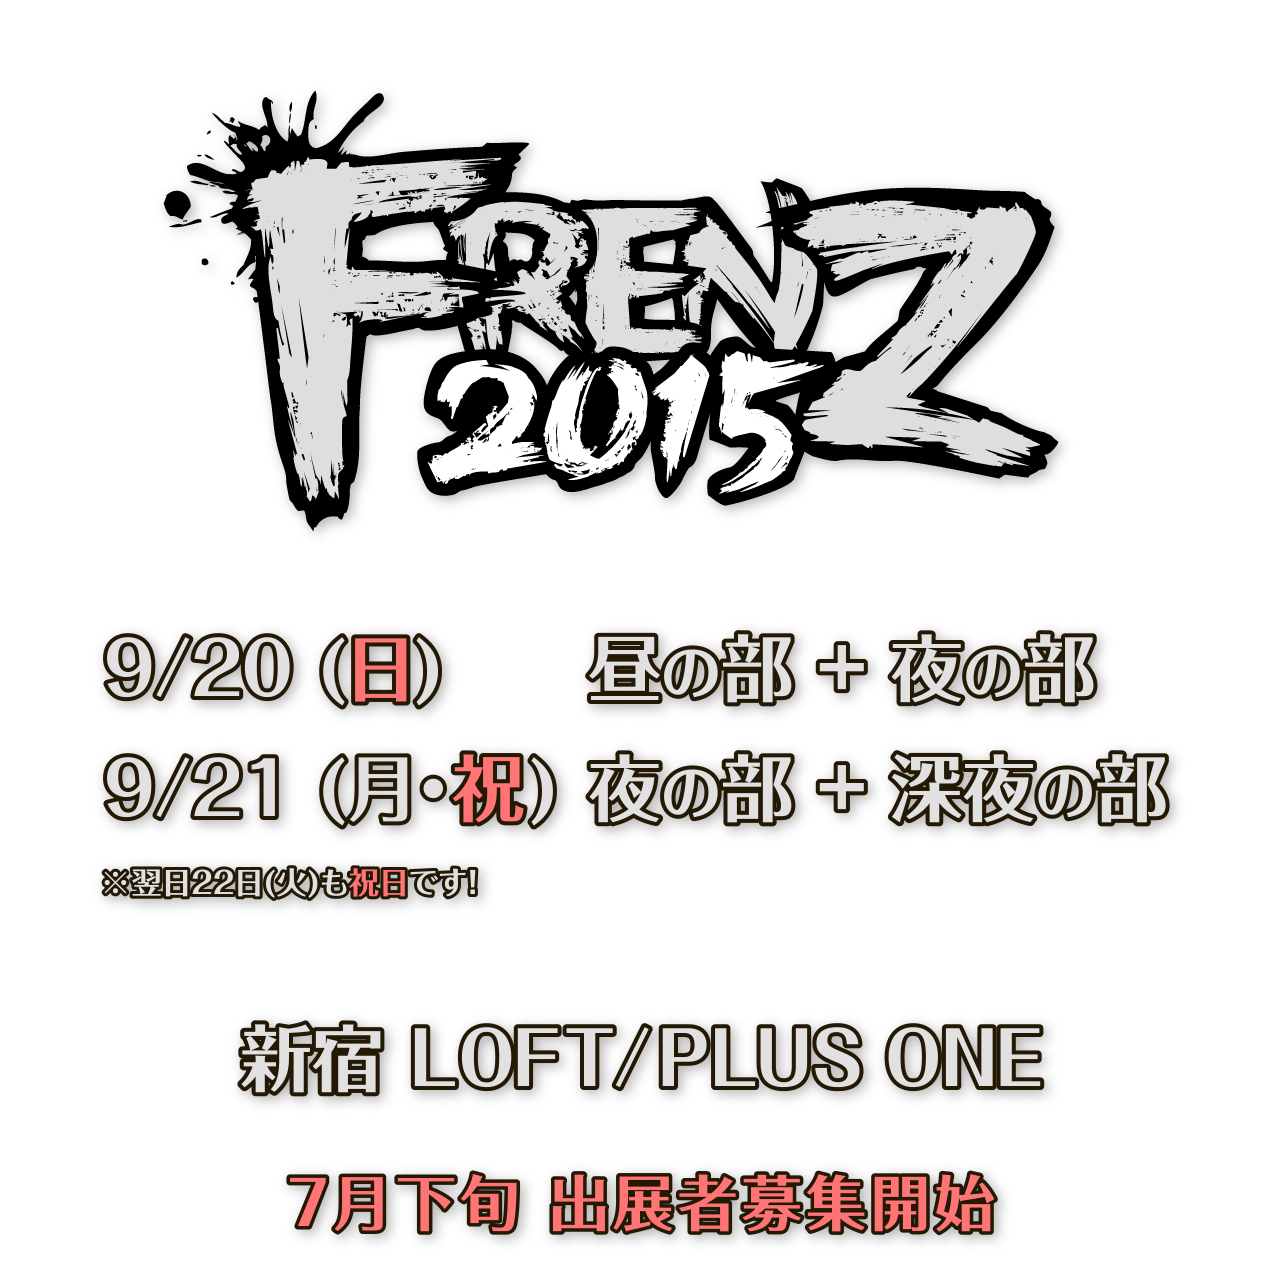 Web上で話題の映像クリエイターによる、新作映像上映イベント『FRENZ 2015』9/20（日）・9/21（月） 新宿LLOFT/PLUS ONE にて開催！